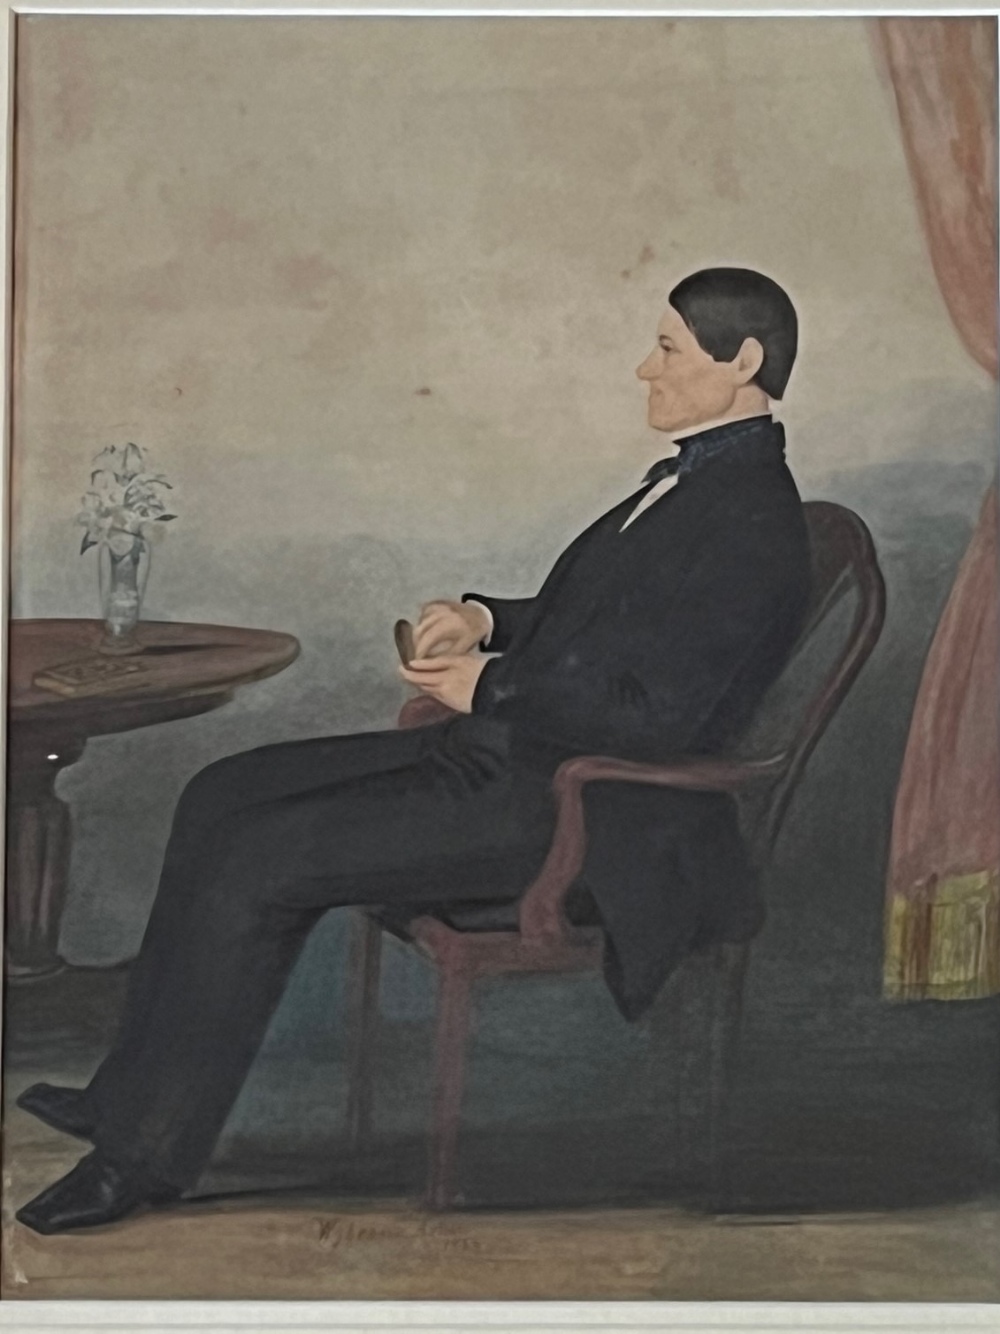 Patrick Wybrant, Irish / American (1816-1894) "Portrait of Gentleman seated (member of the